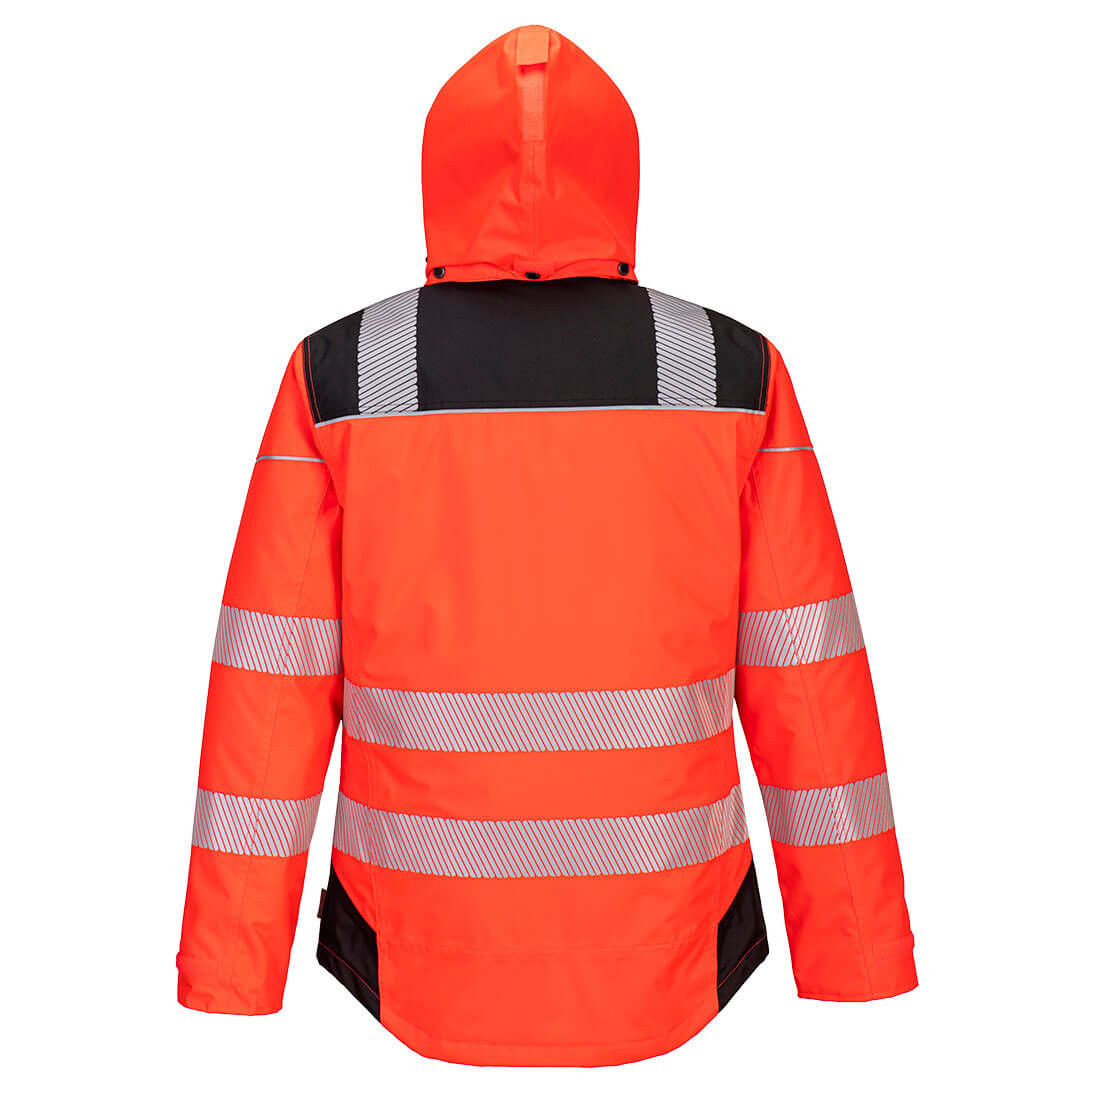 PW3 Warnschutz-Regenjacke - Arbeitskleidung